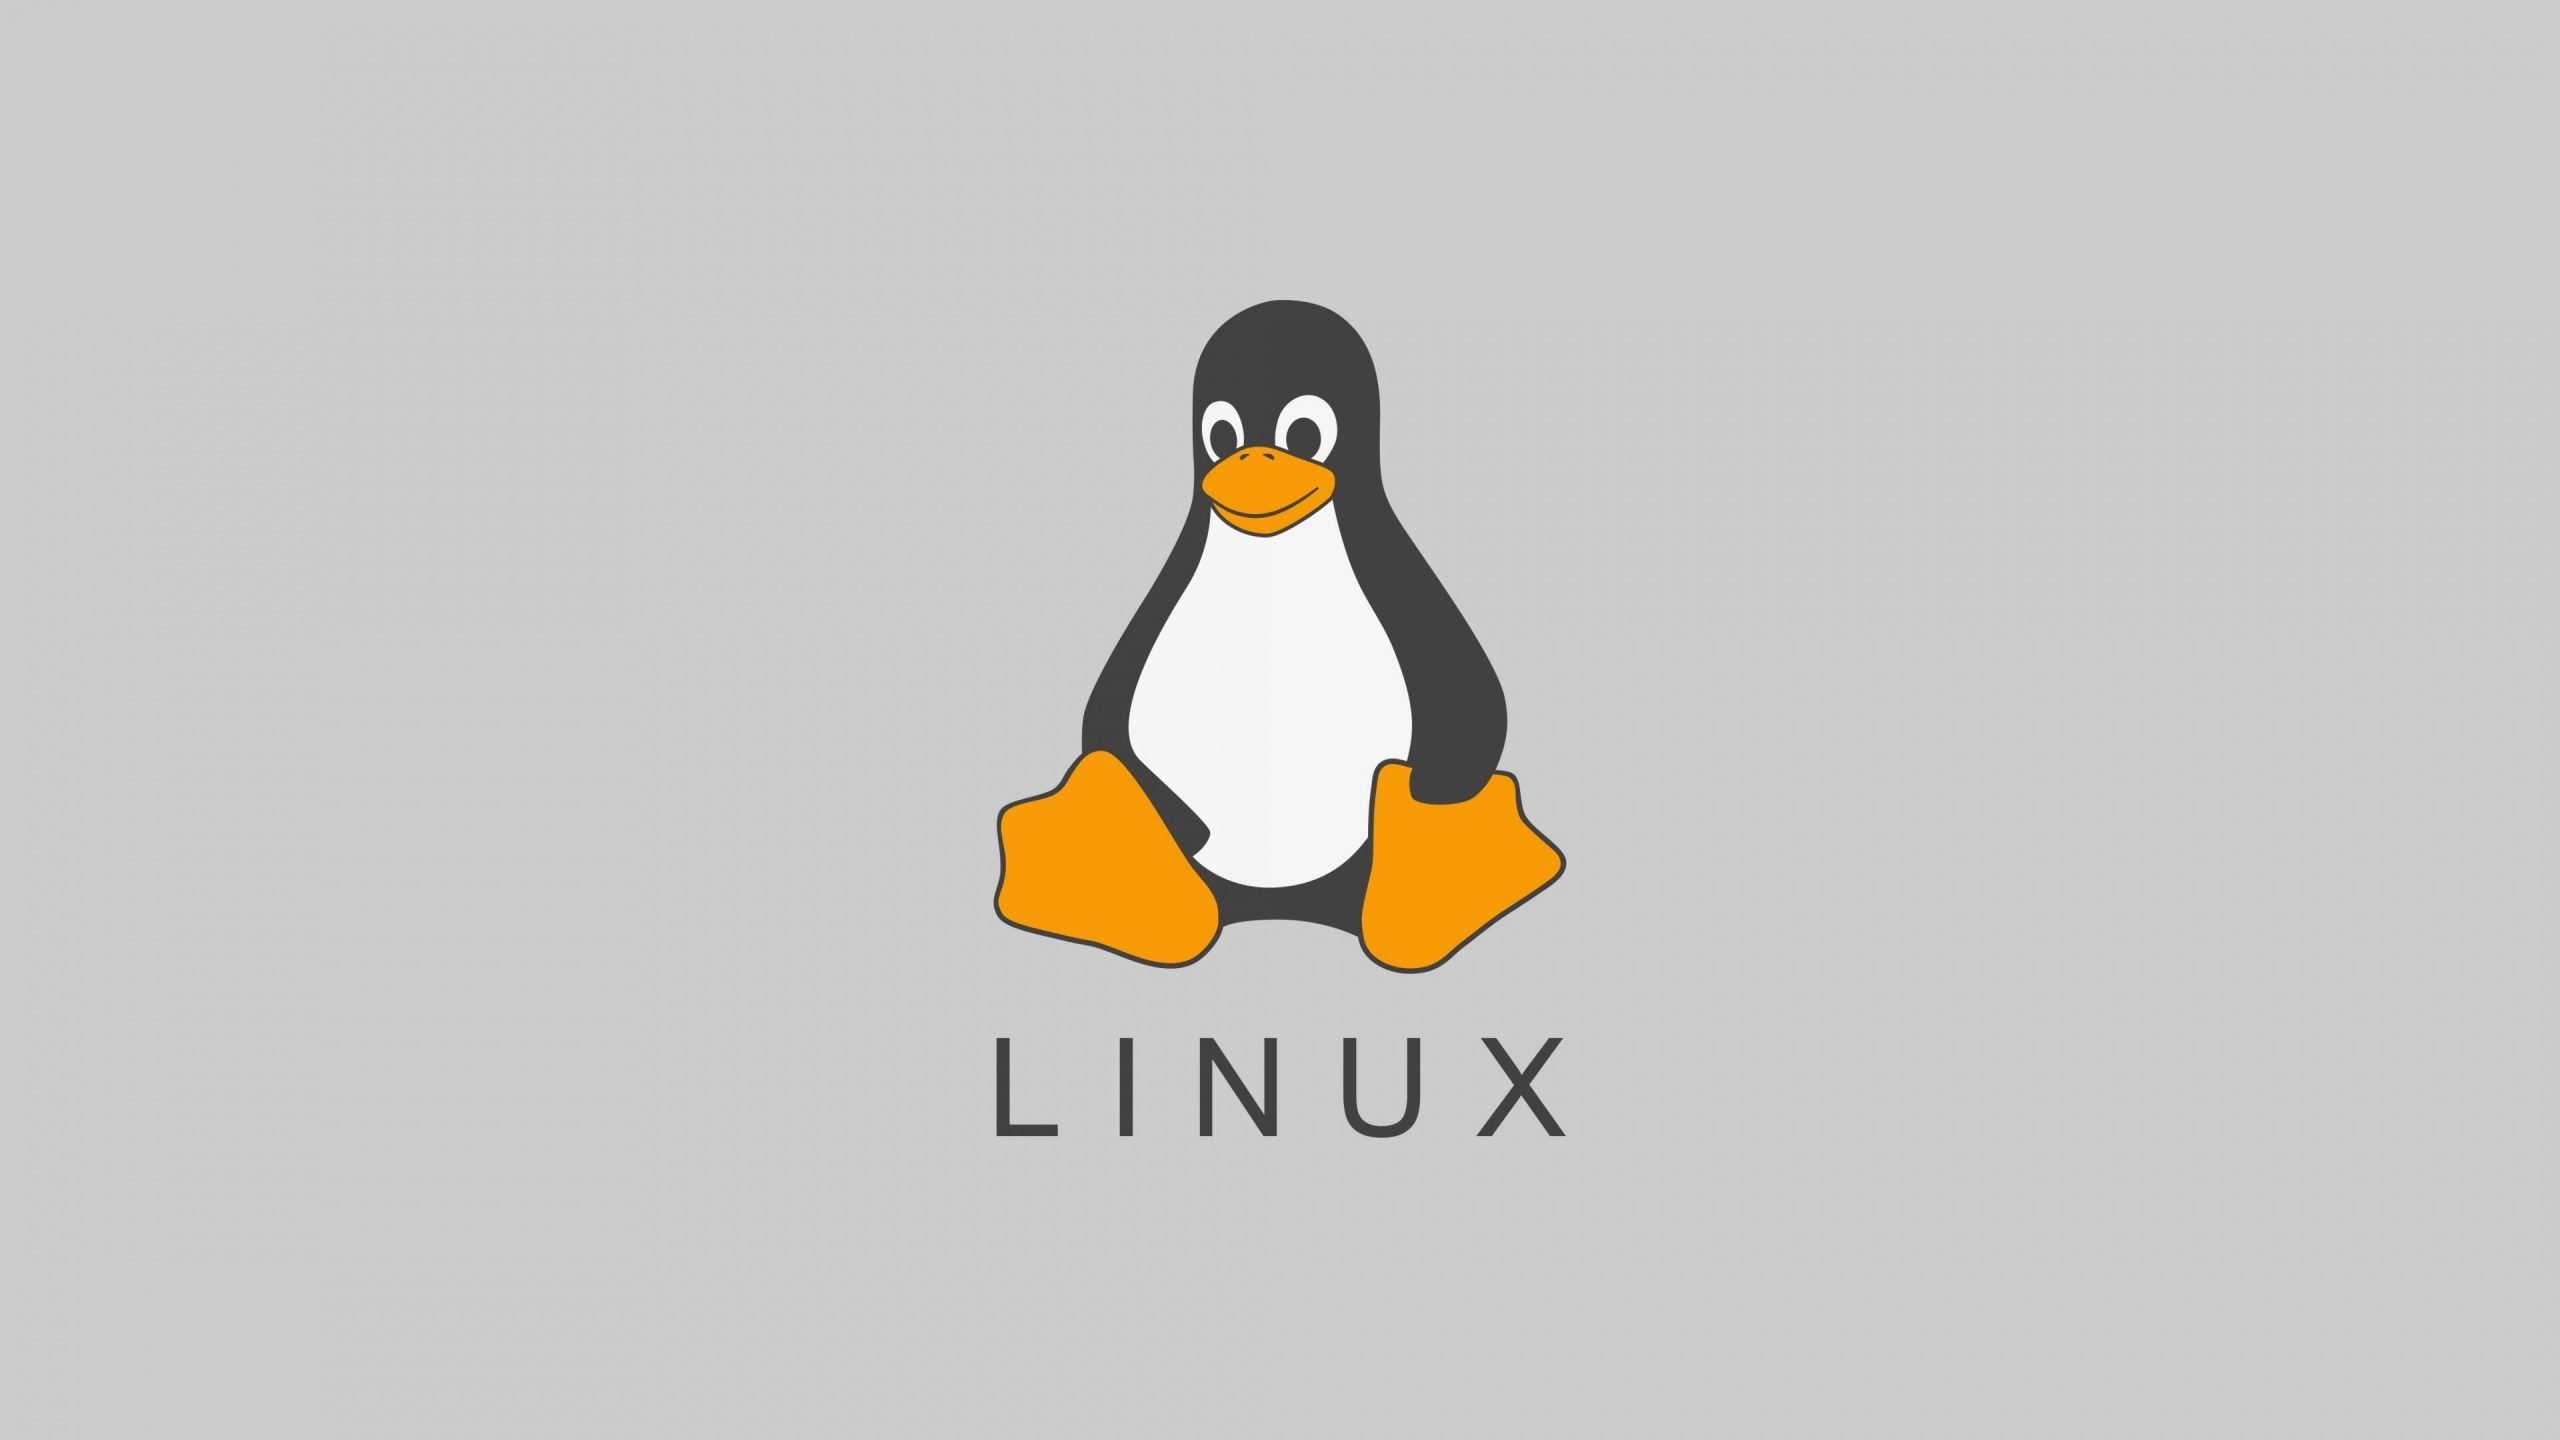 DistroWatch'daki ilk 10 Linux dağıtımı